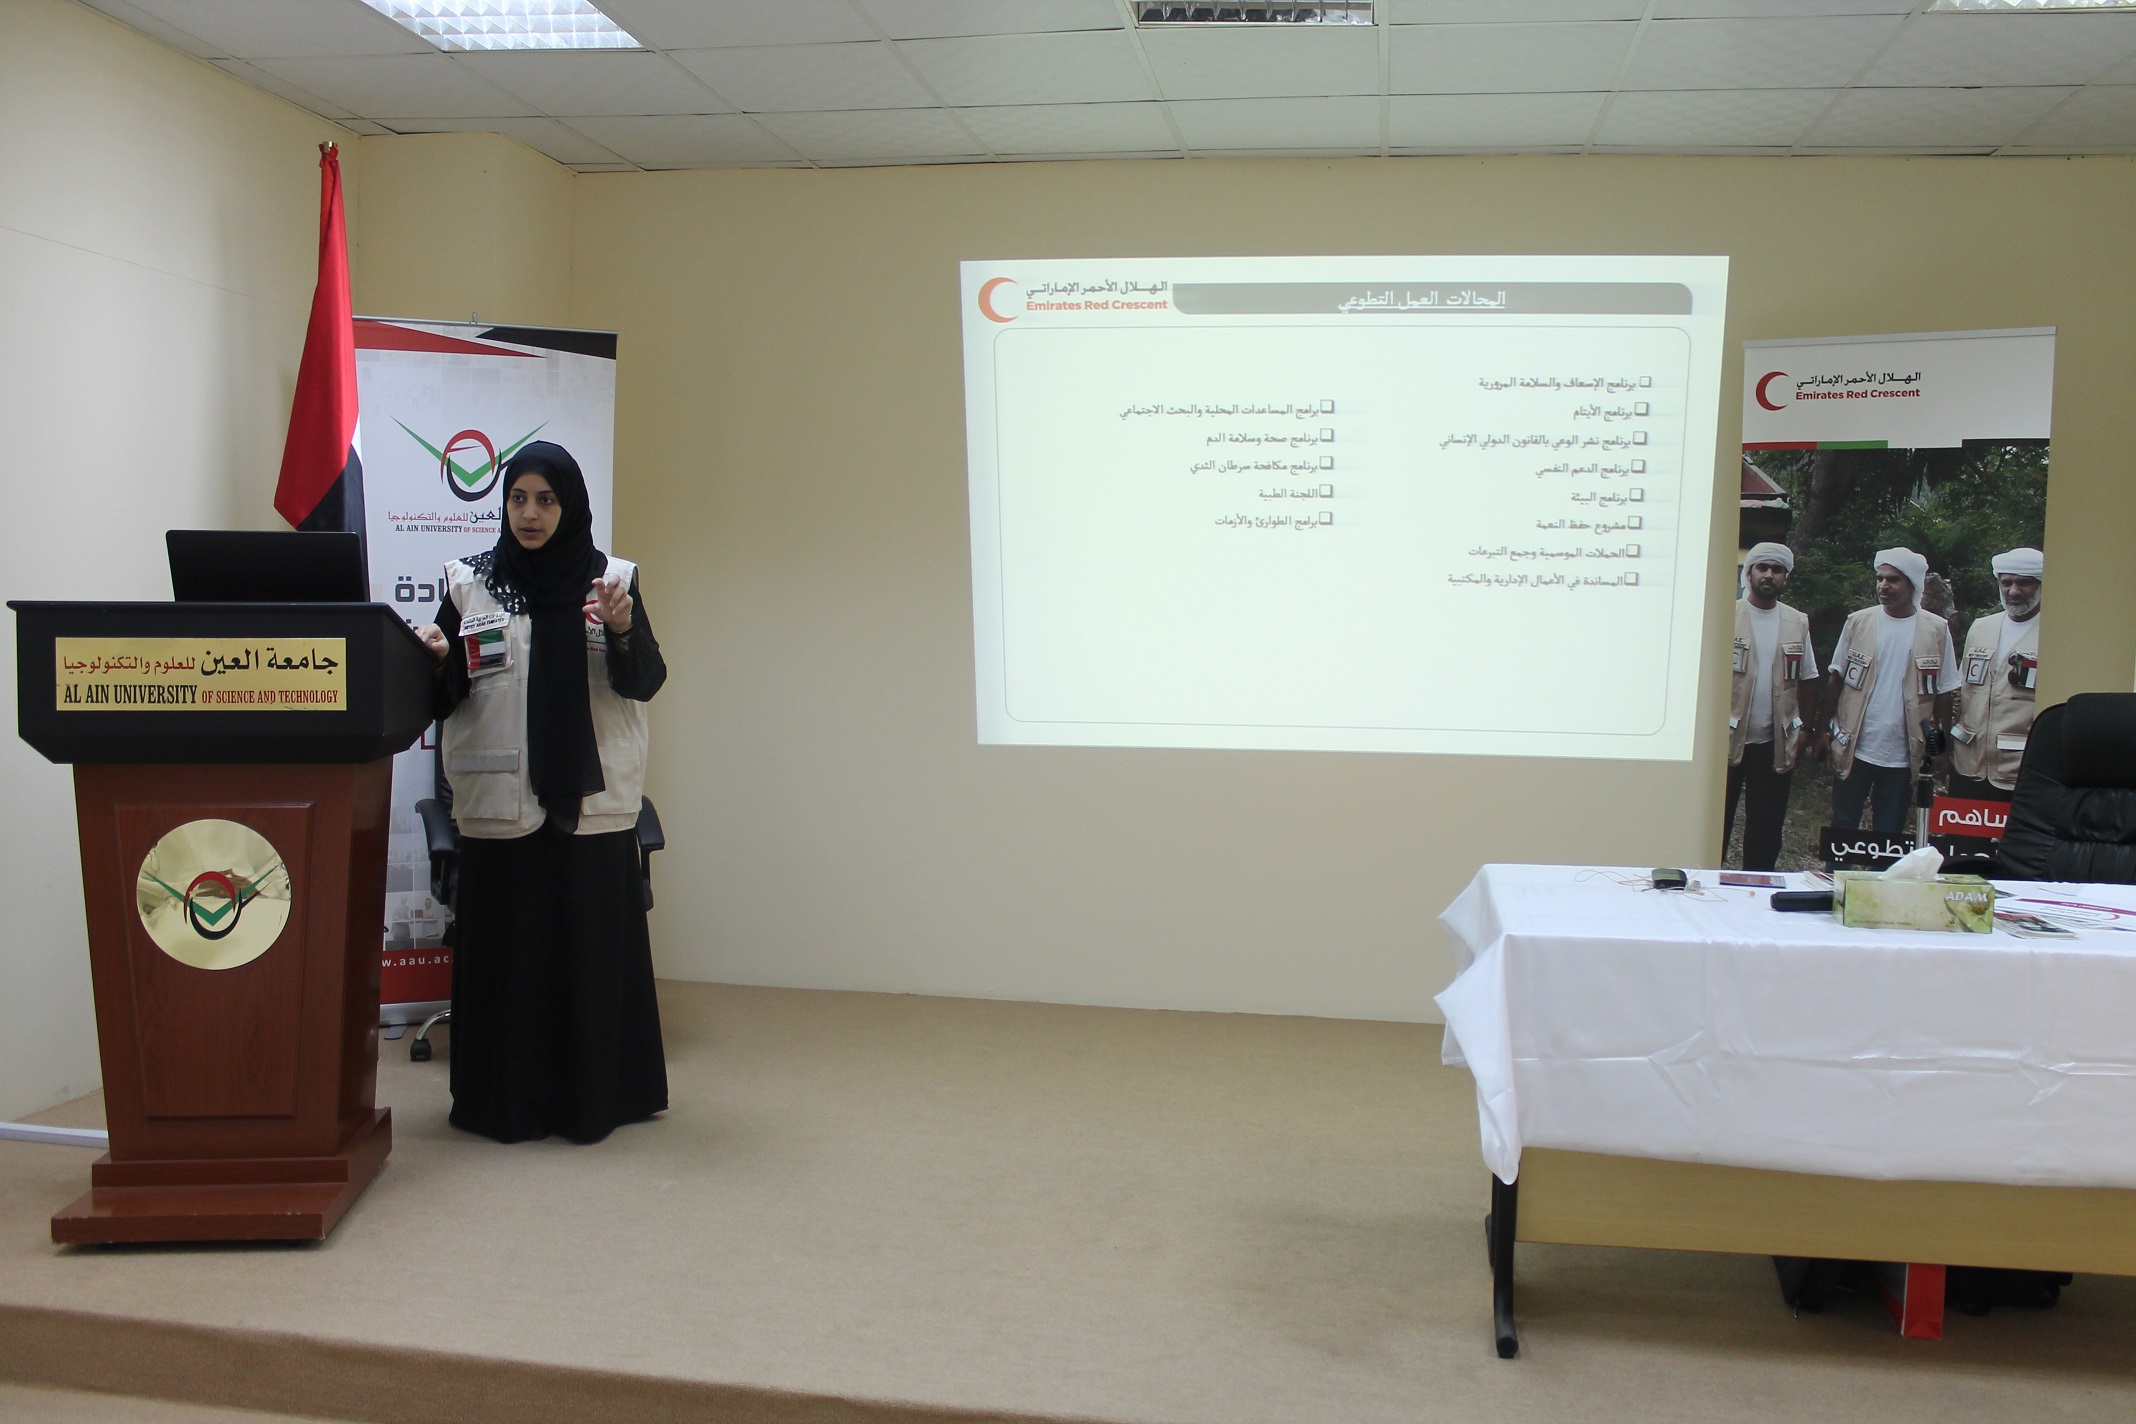  The Forum of ‘Saham’ Voluntary Program in Al Ain University